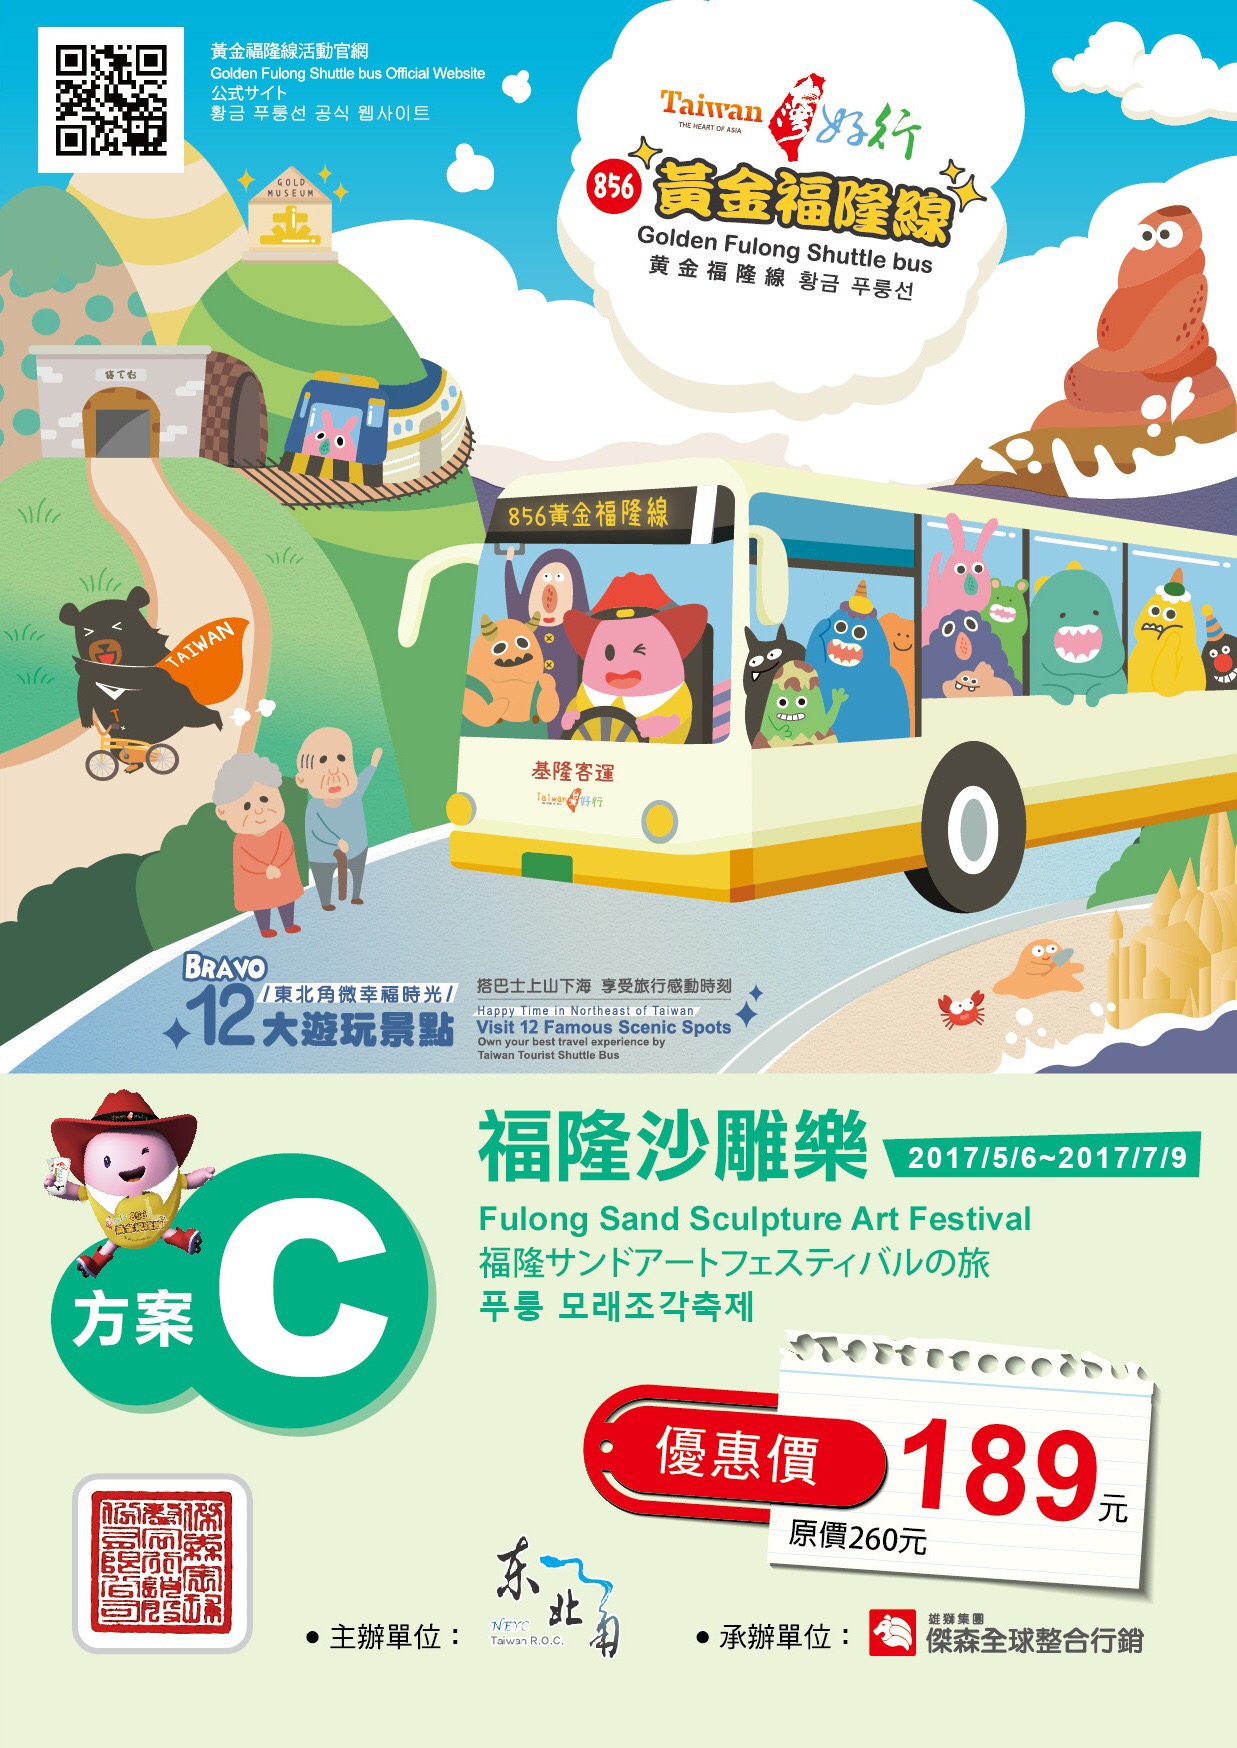 Kupon Hari Bus Golden Fulong Line Bank Taiwan Yang Baik + Tiket Fulong Bento + Fulong Beach